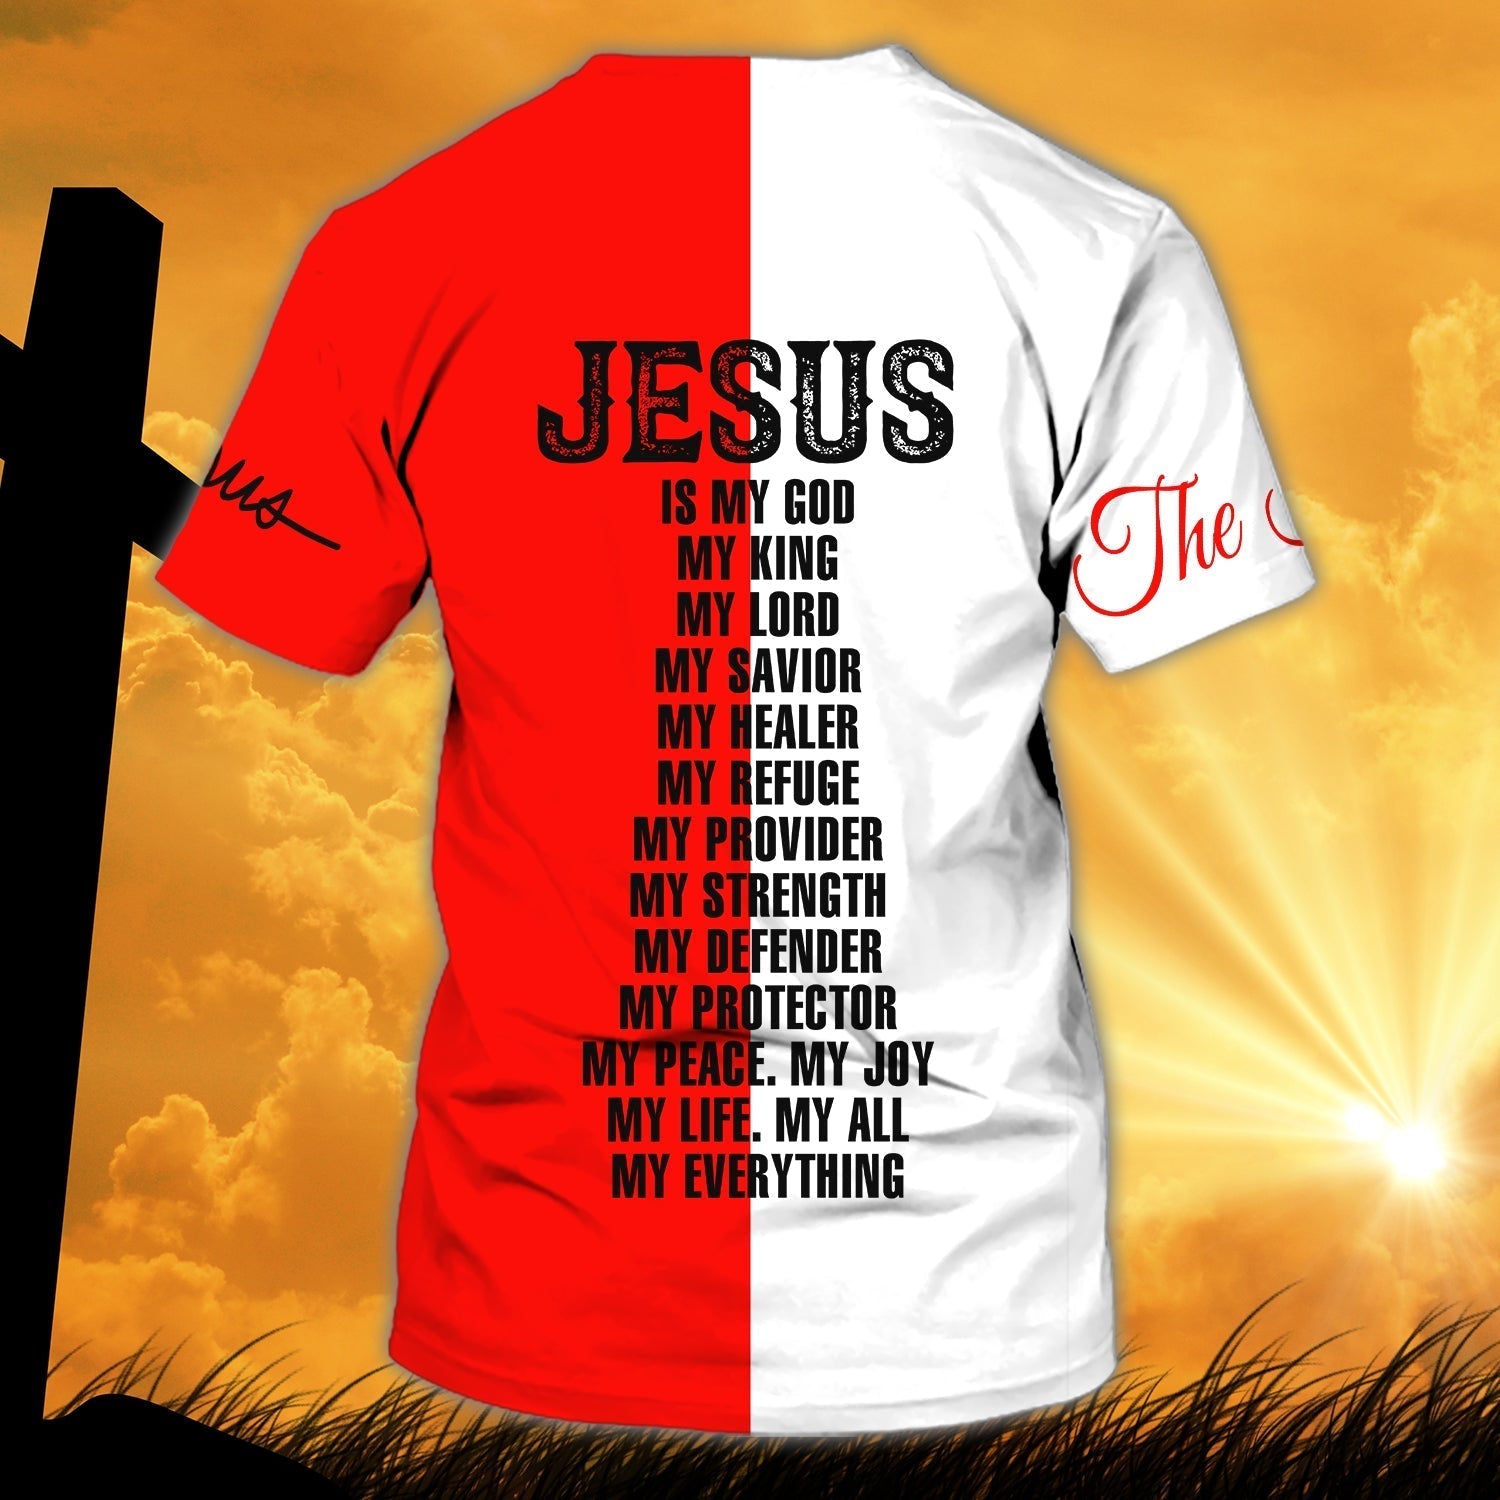 Custom Name Child Of God T Shirt God And Lion T Shirt Gift For Christian T Shirt